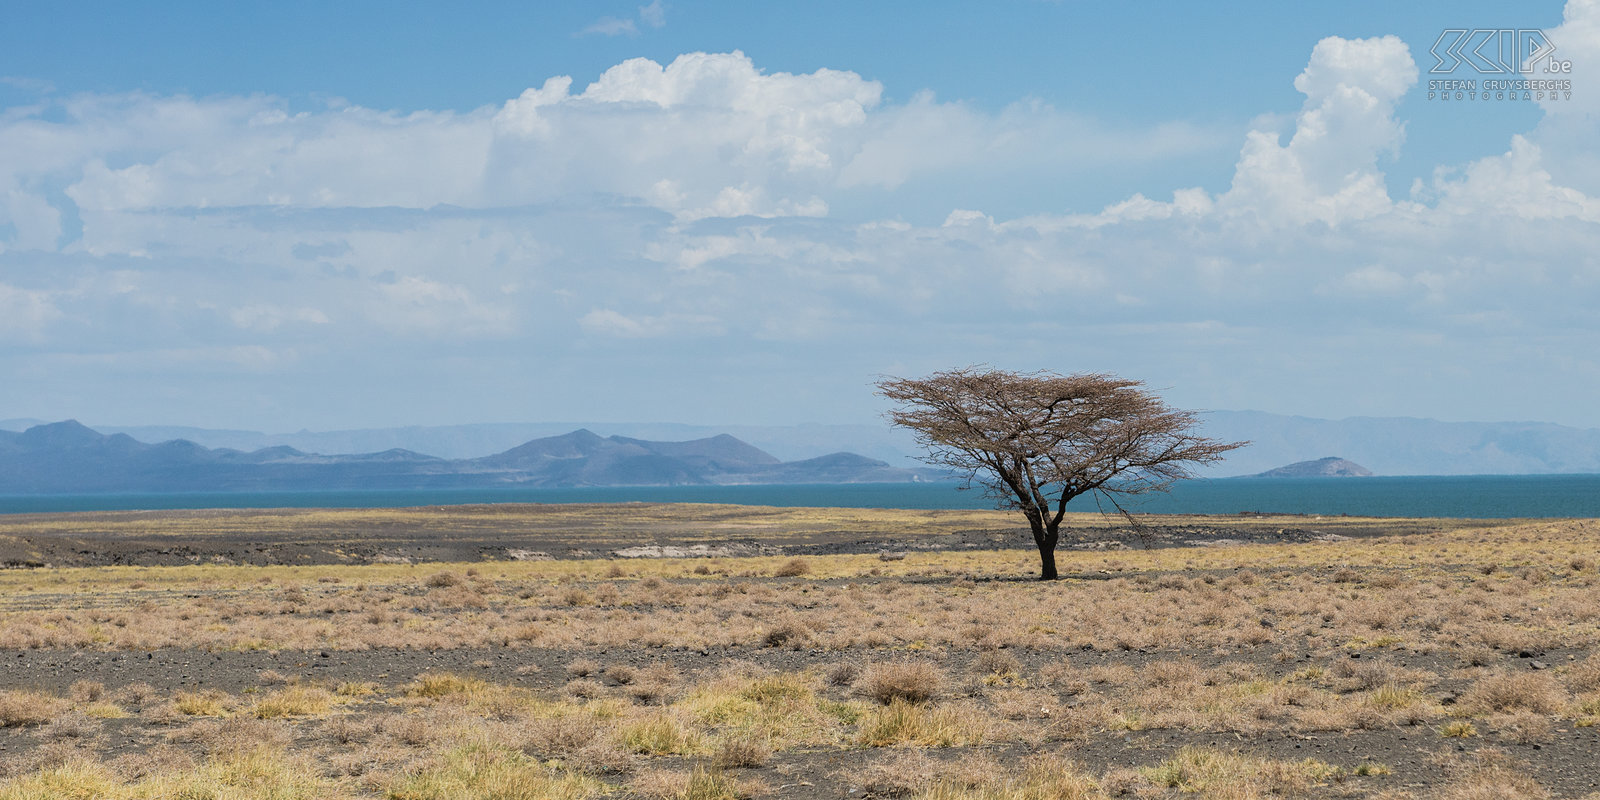 Lake Turkana Lonely acacia tree on the hot plains near Lake Turkana. Stefan Cruysberghs